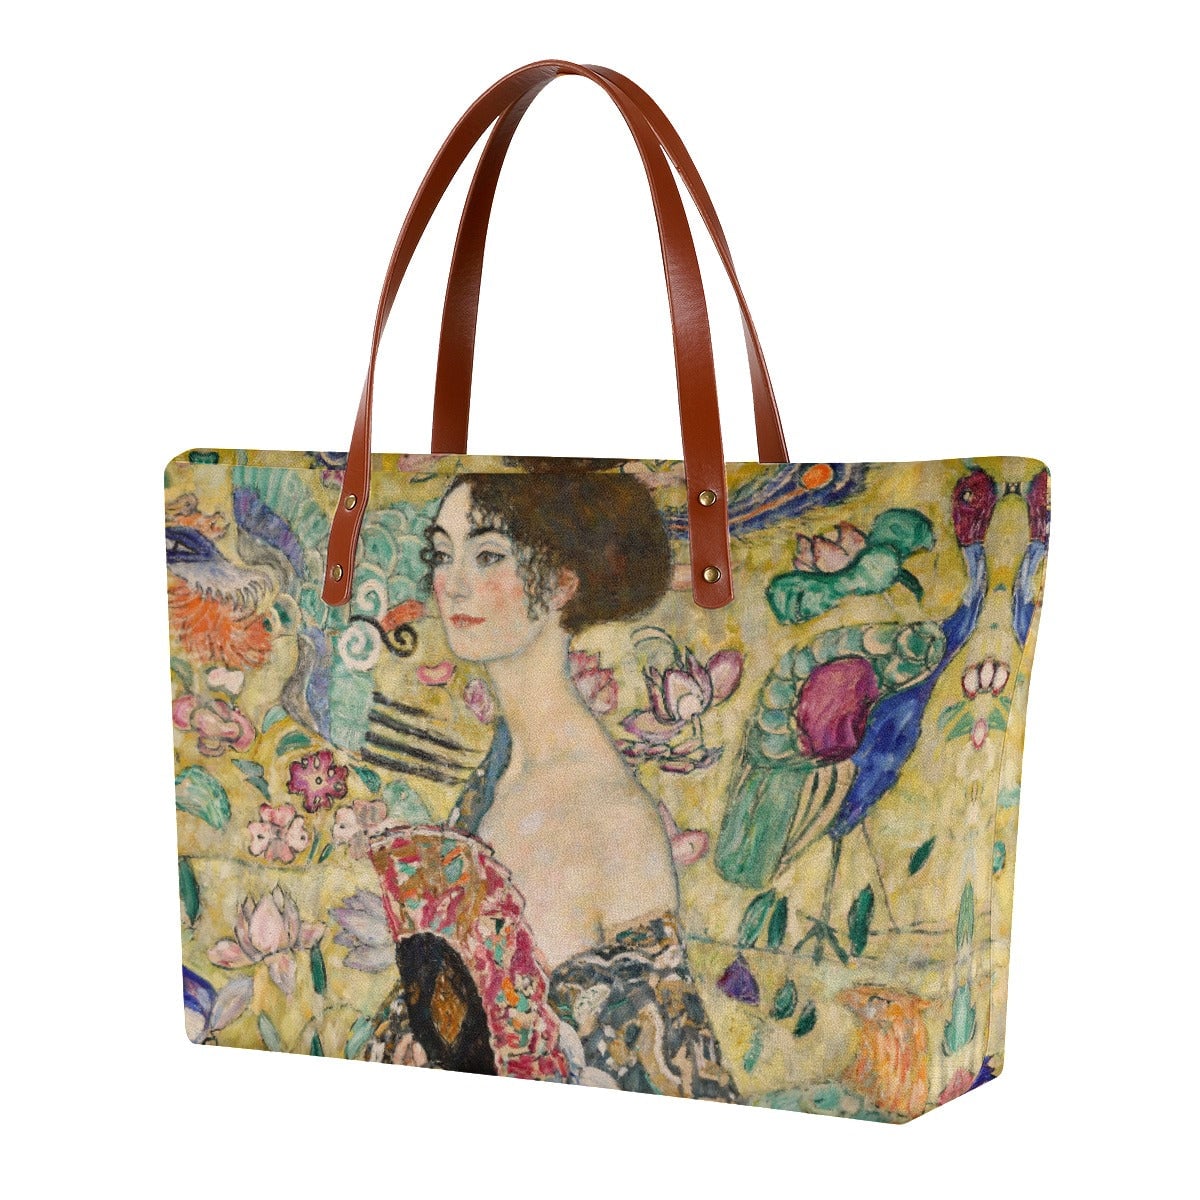 Lady with Fan by Gustav Klimt Painting Waterproof Tote Bag